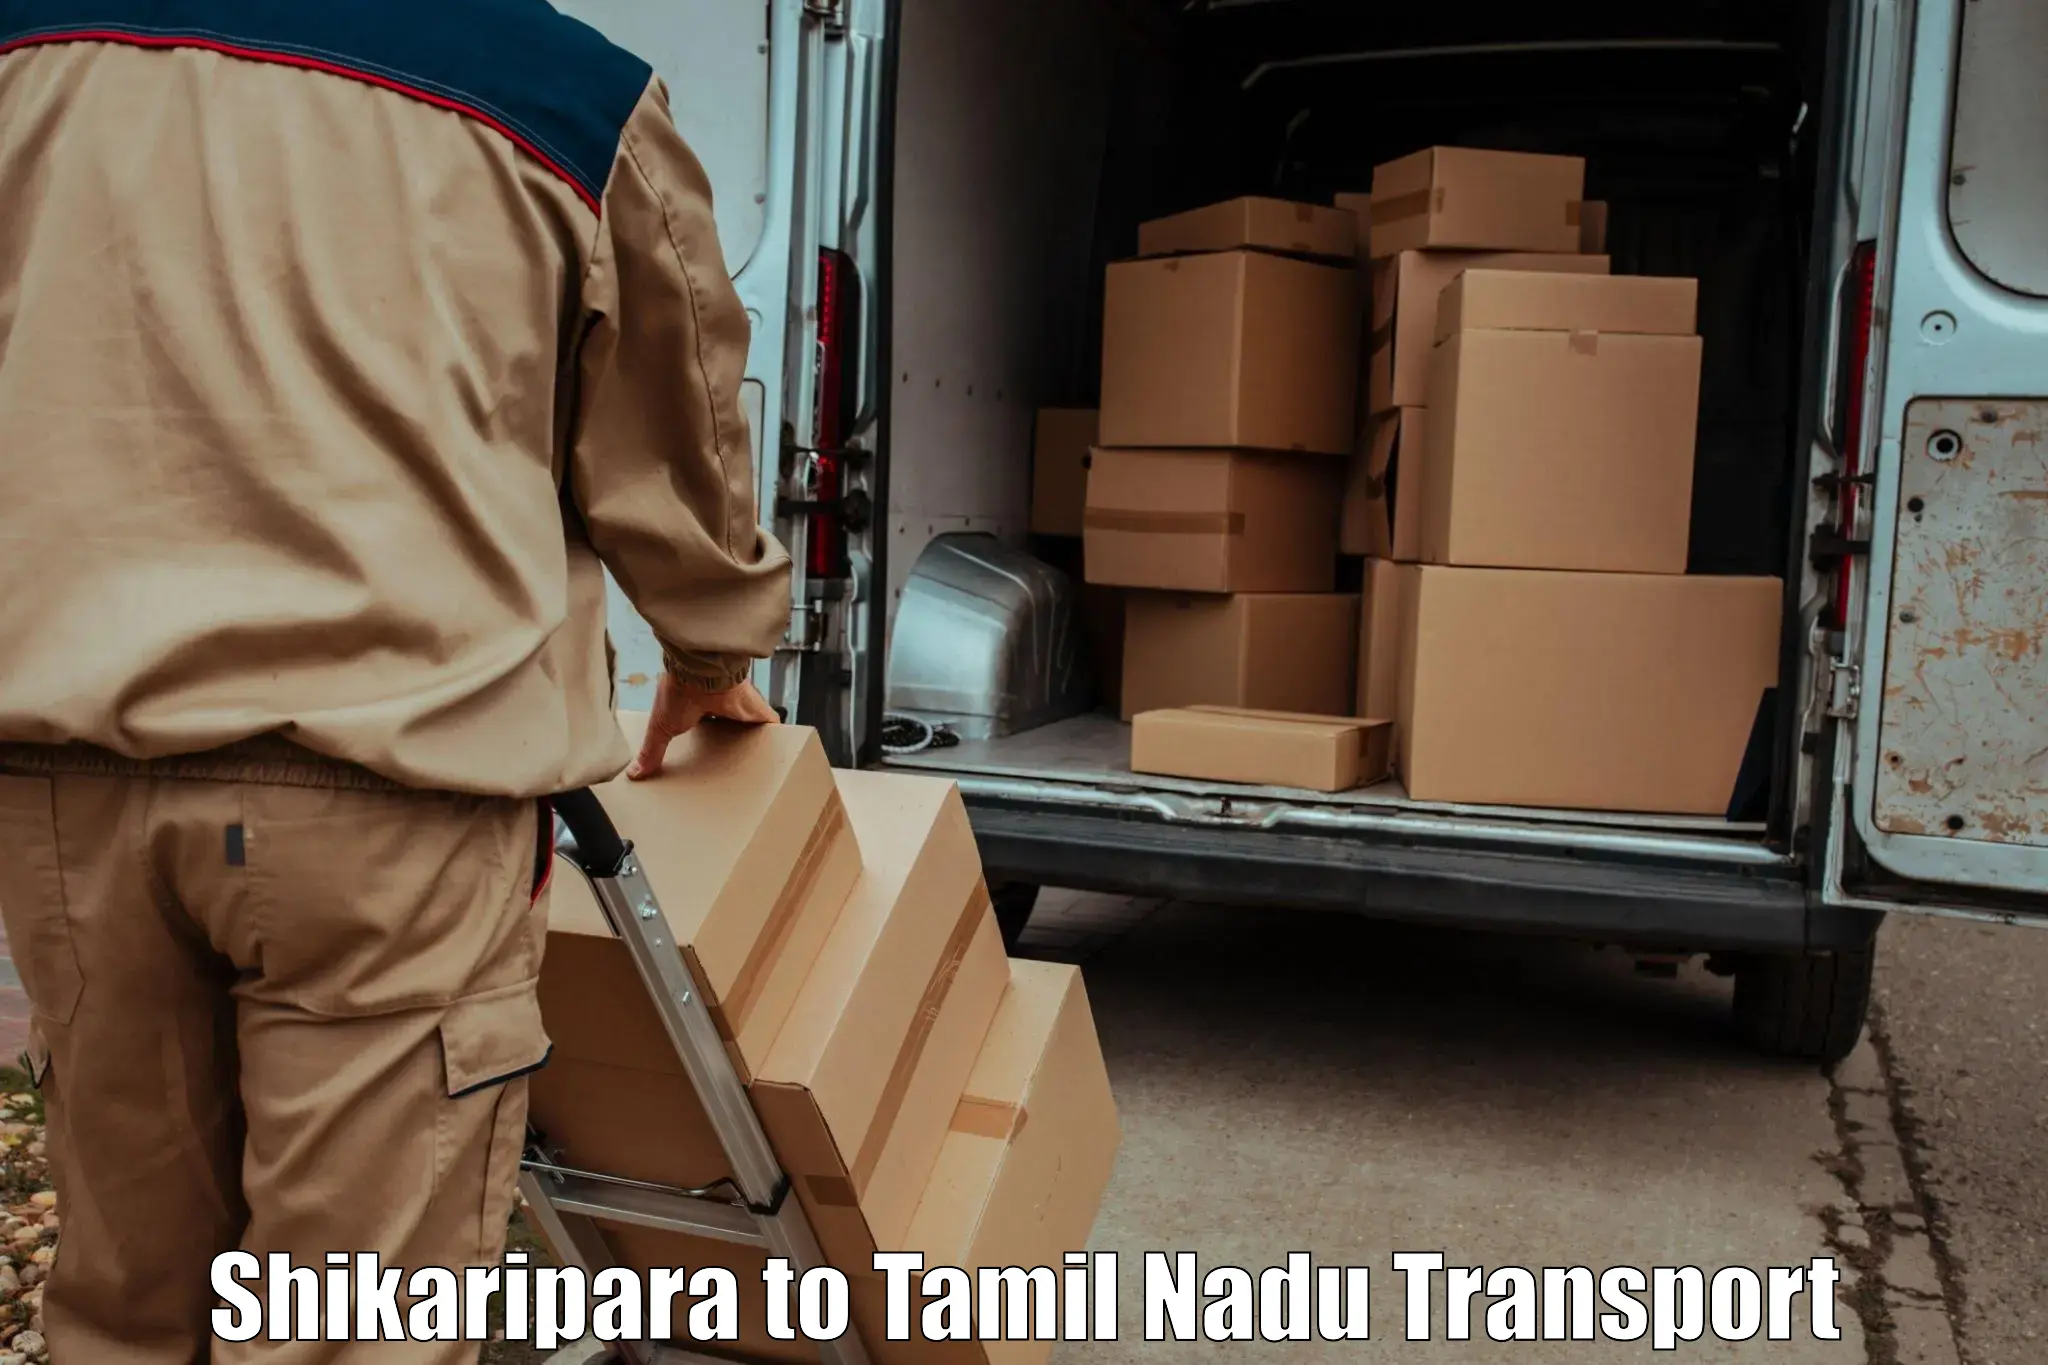 International cargo transportation services Shikaripara to Kulittalai